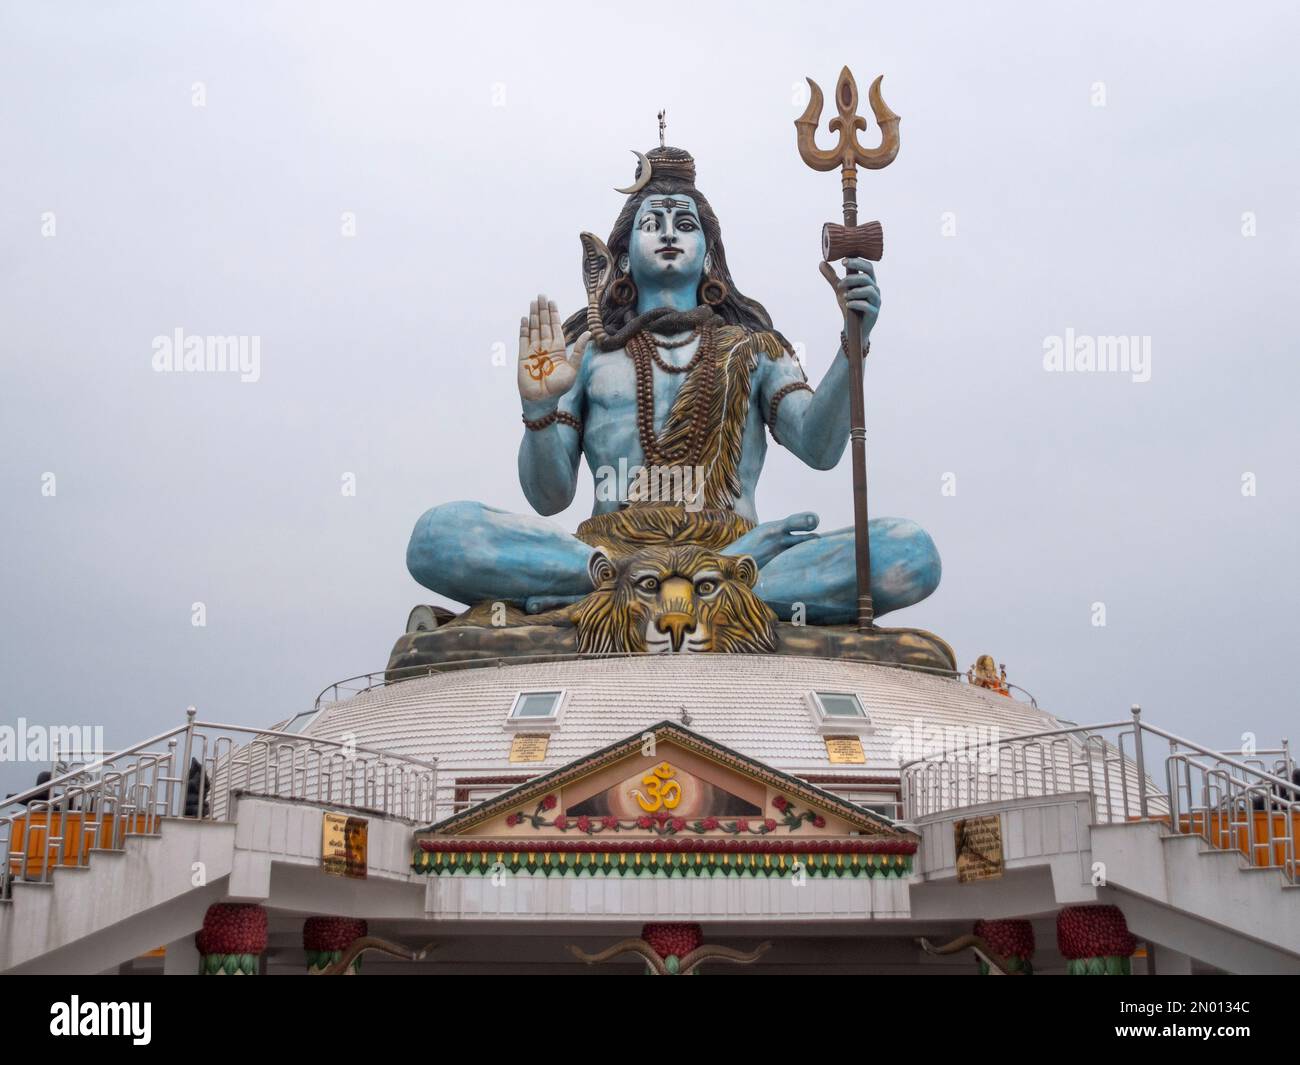 Huge statue of hindu god Lord Shiva at Pokhara, Nepal. Stock Photo